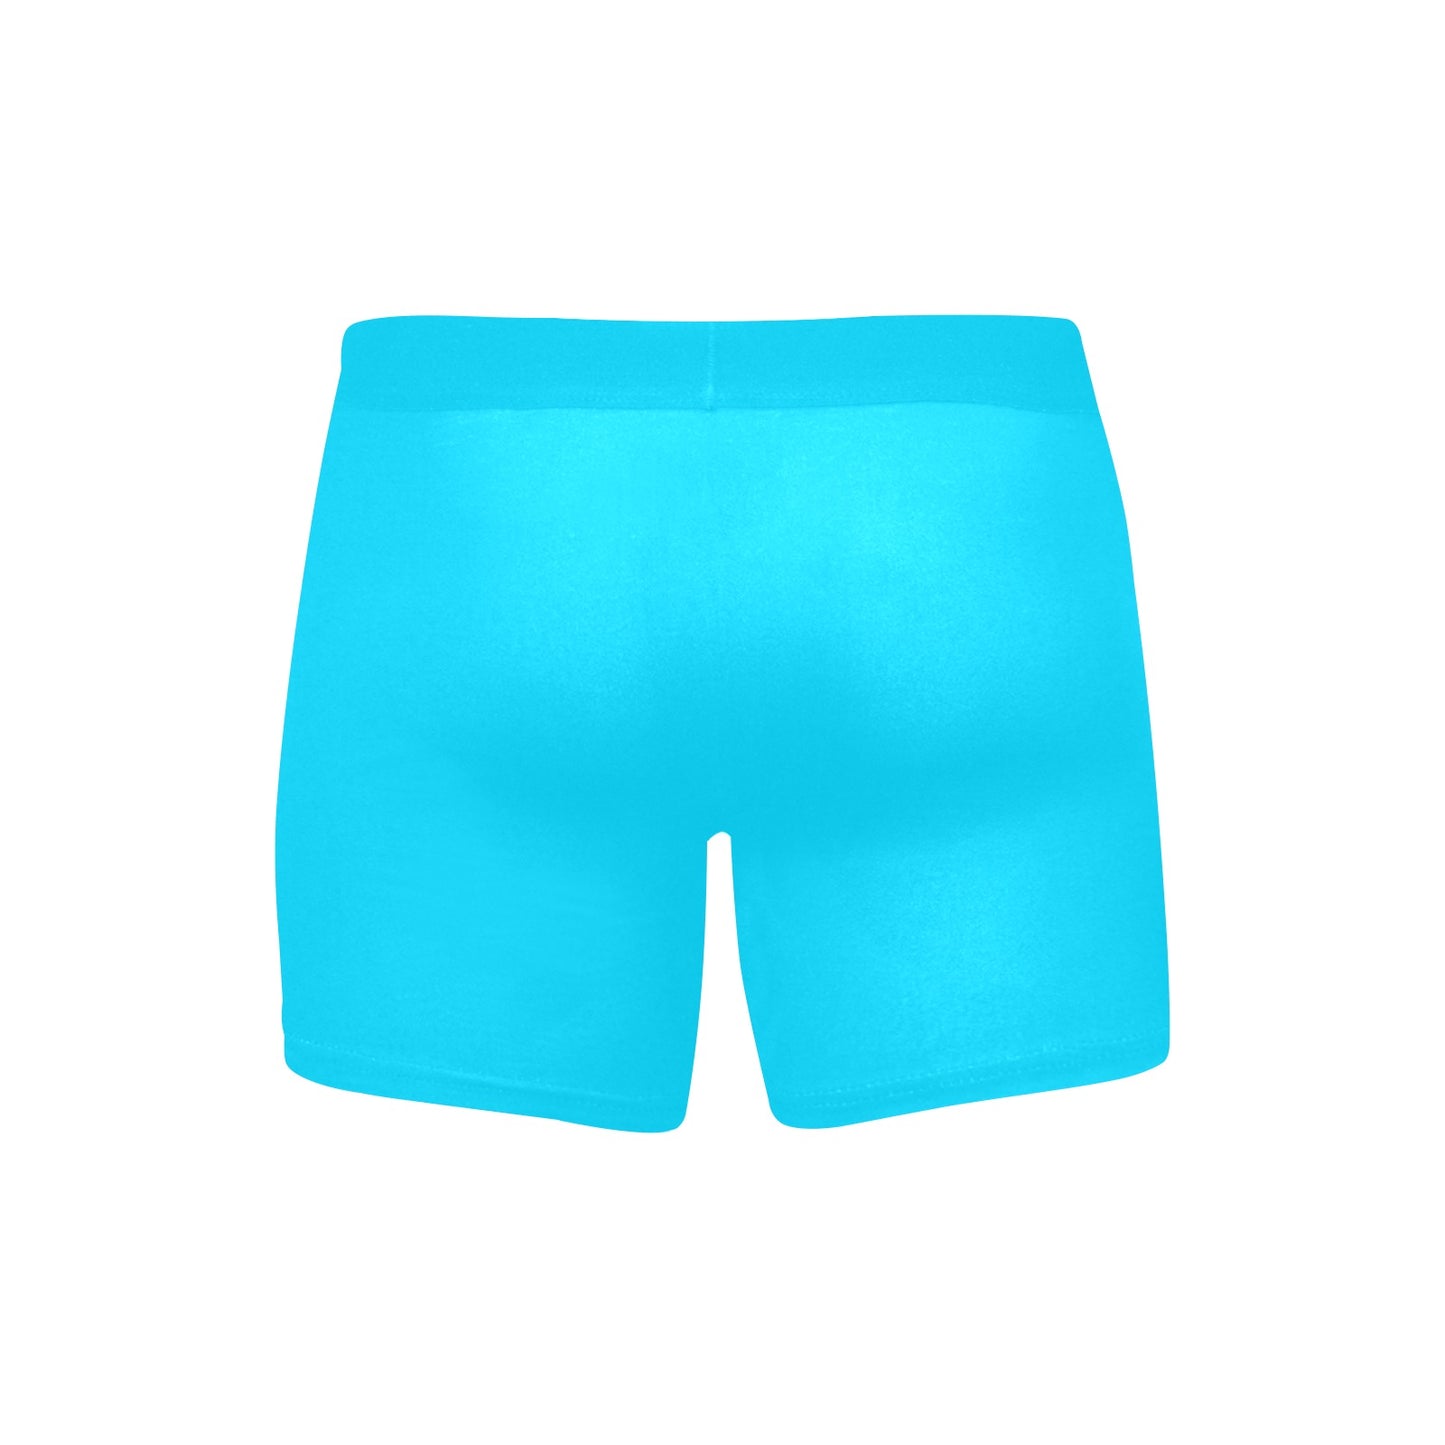 Sixty Eight 93 Logo White Aqua Blue Boxer Briefs with Inner Pocket